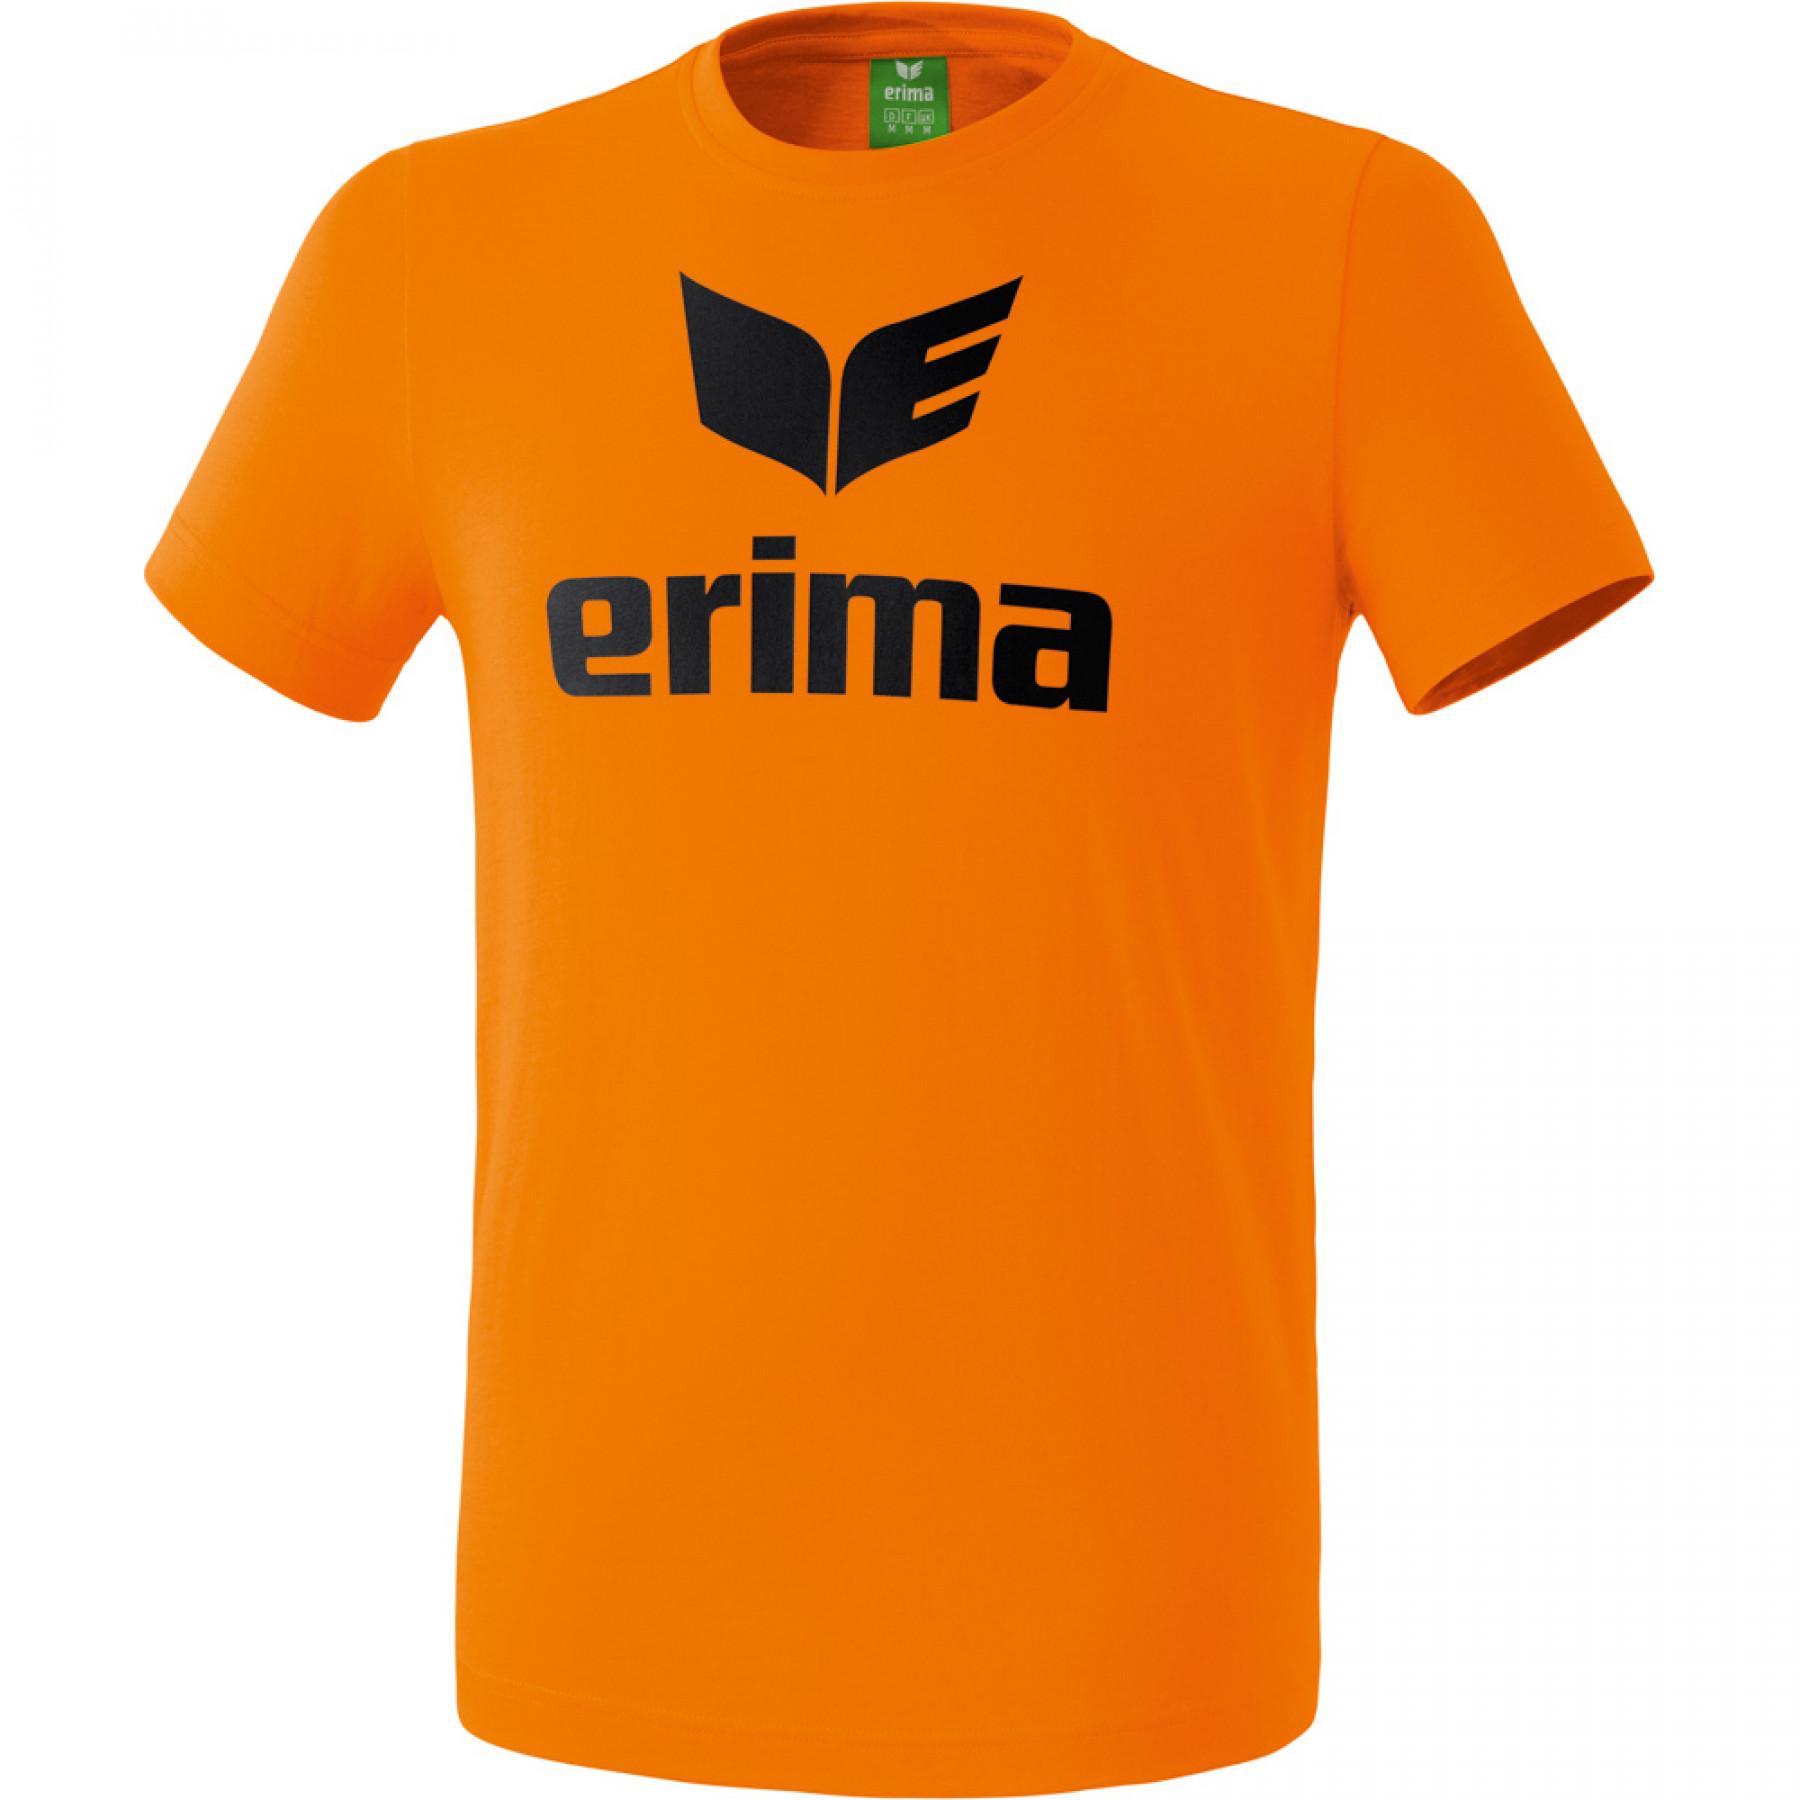 Koszulka dziecięca Erima Promo